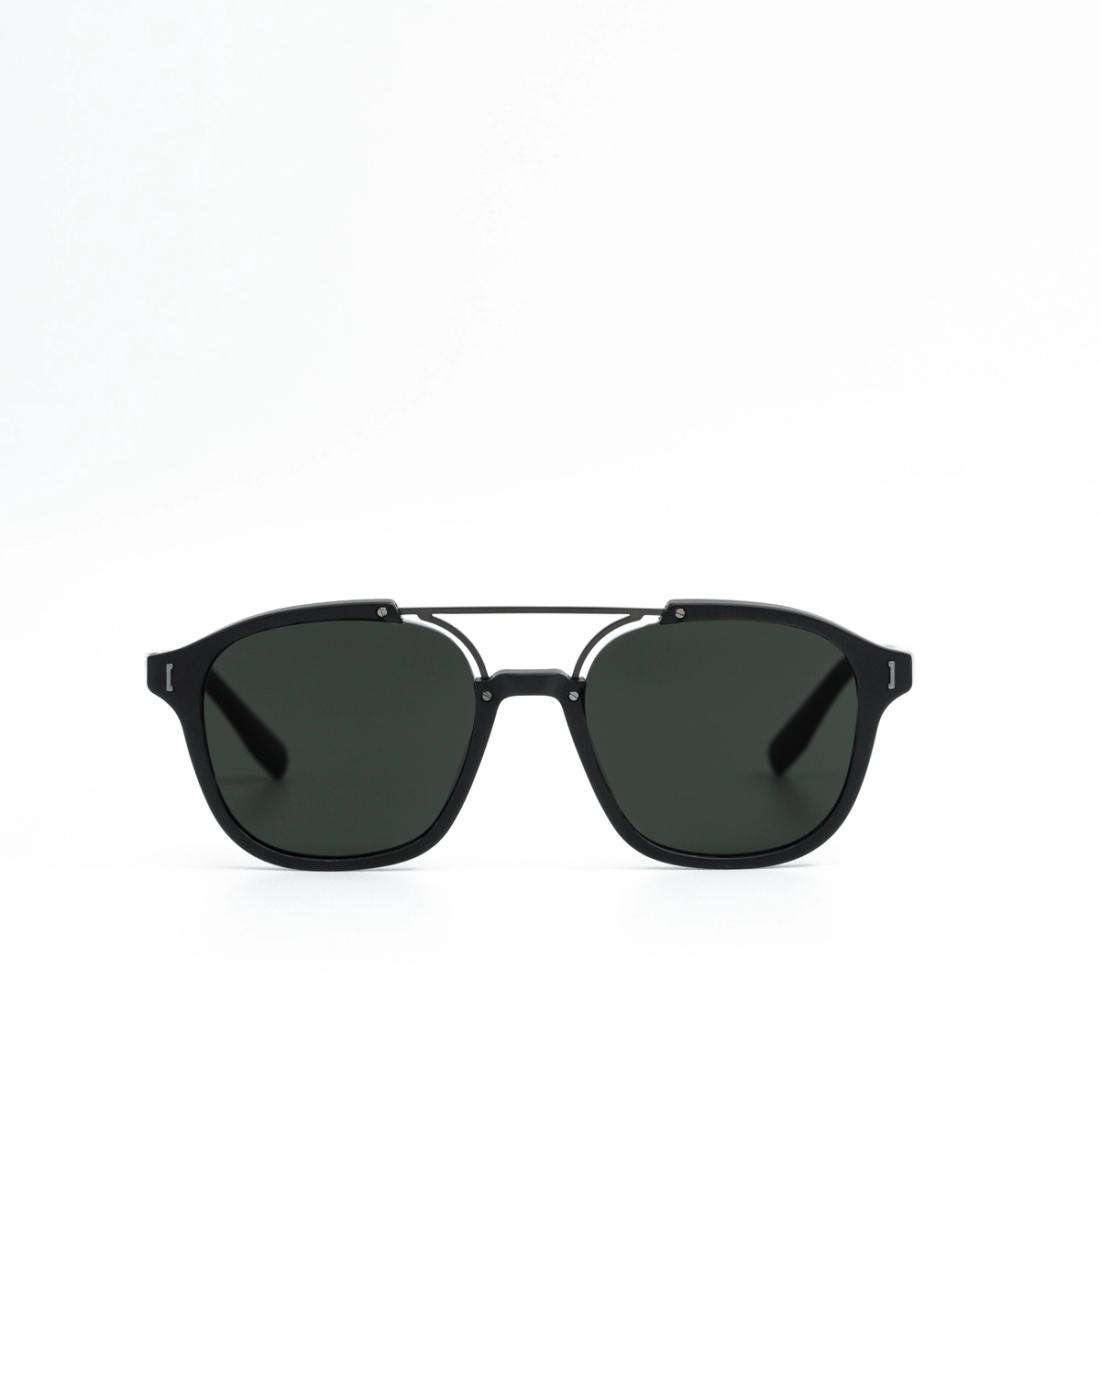 J82-sunglasses